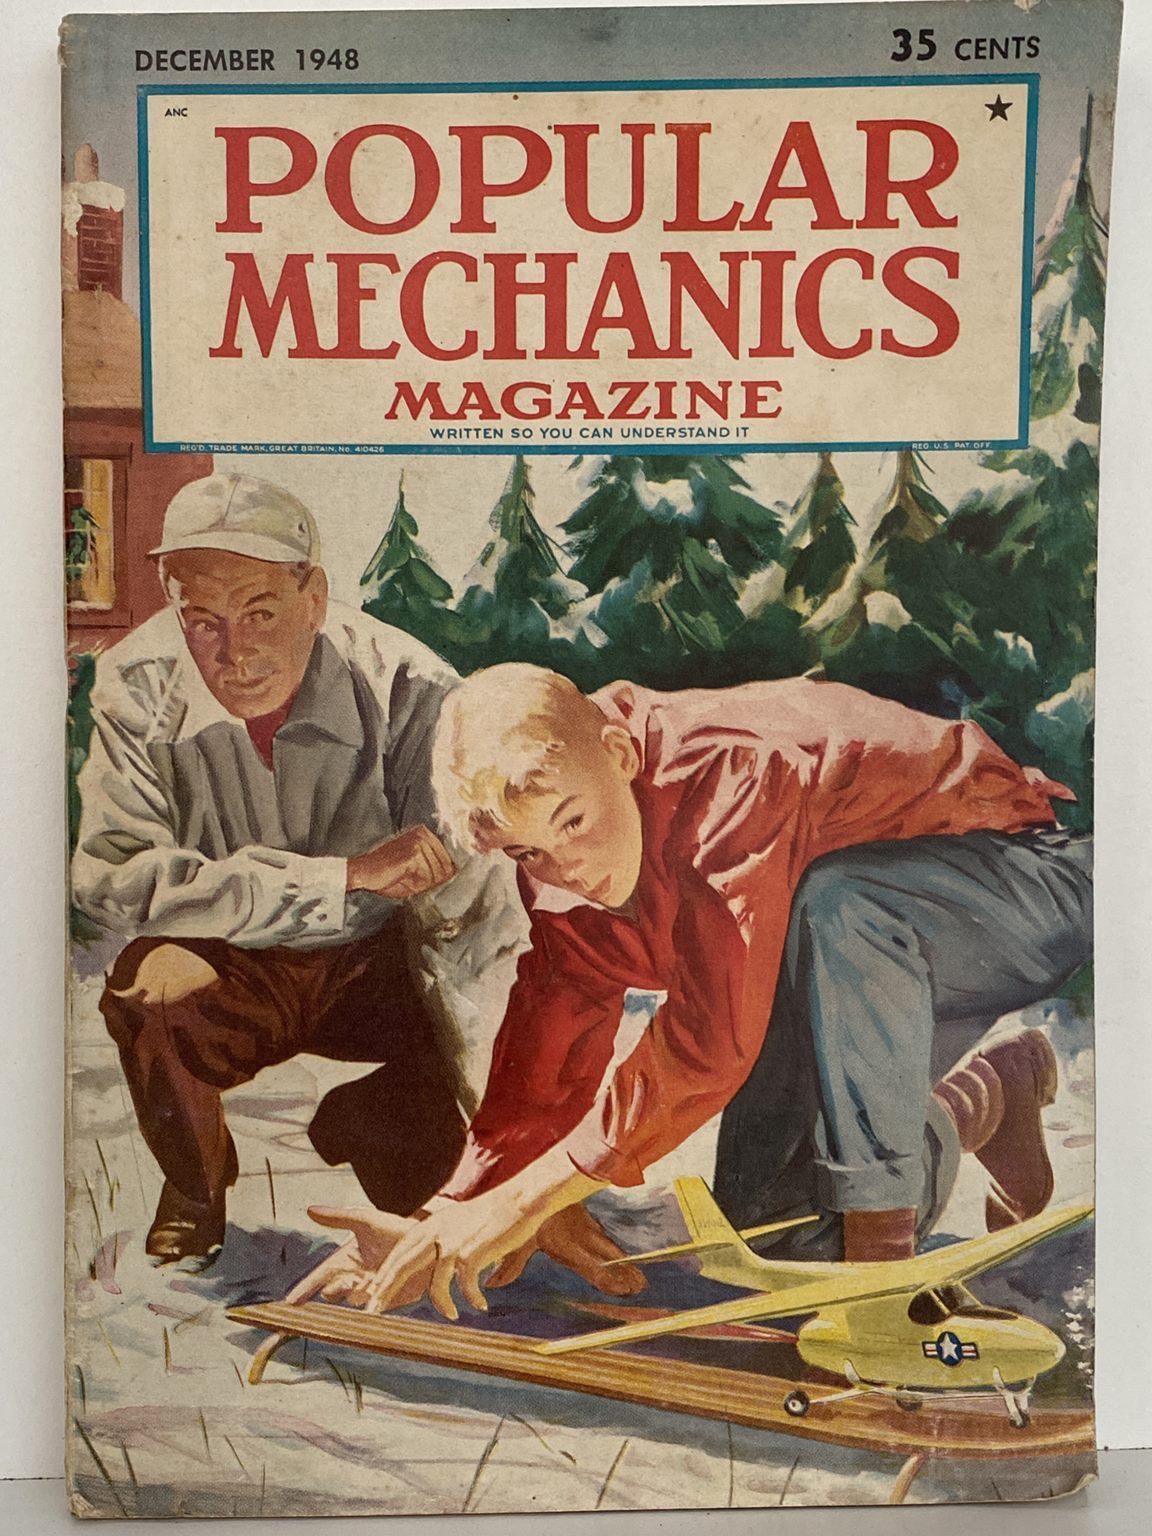 VINTAGE MAGAZINE: Popular Mechanics - Vol. 90, No. 6 - December 1948